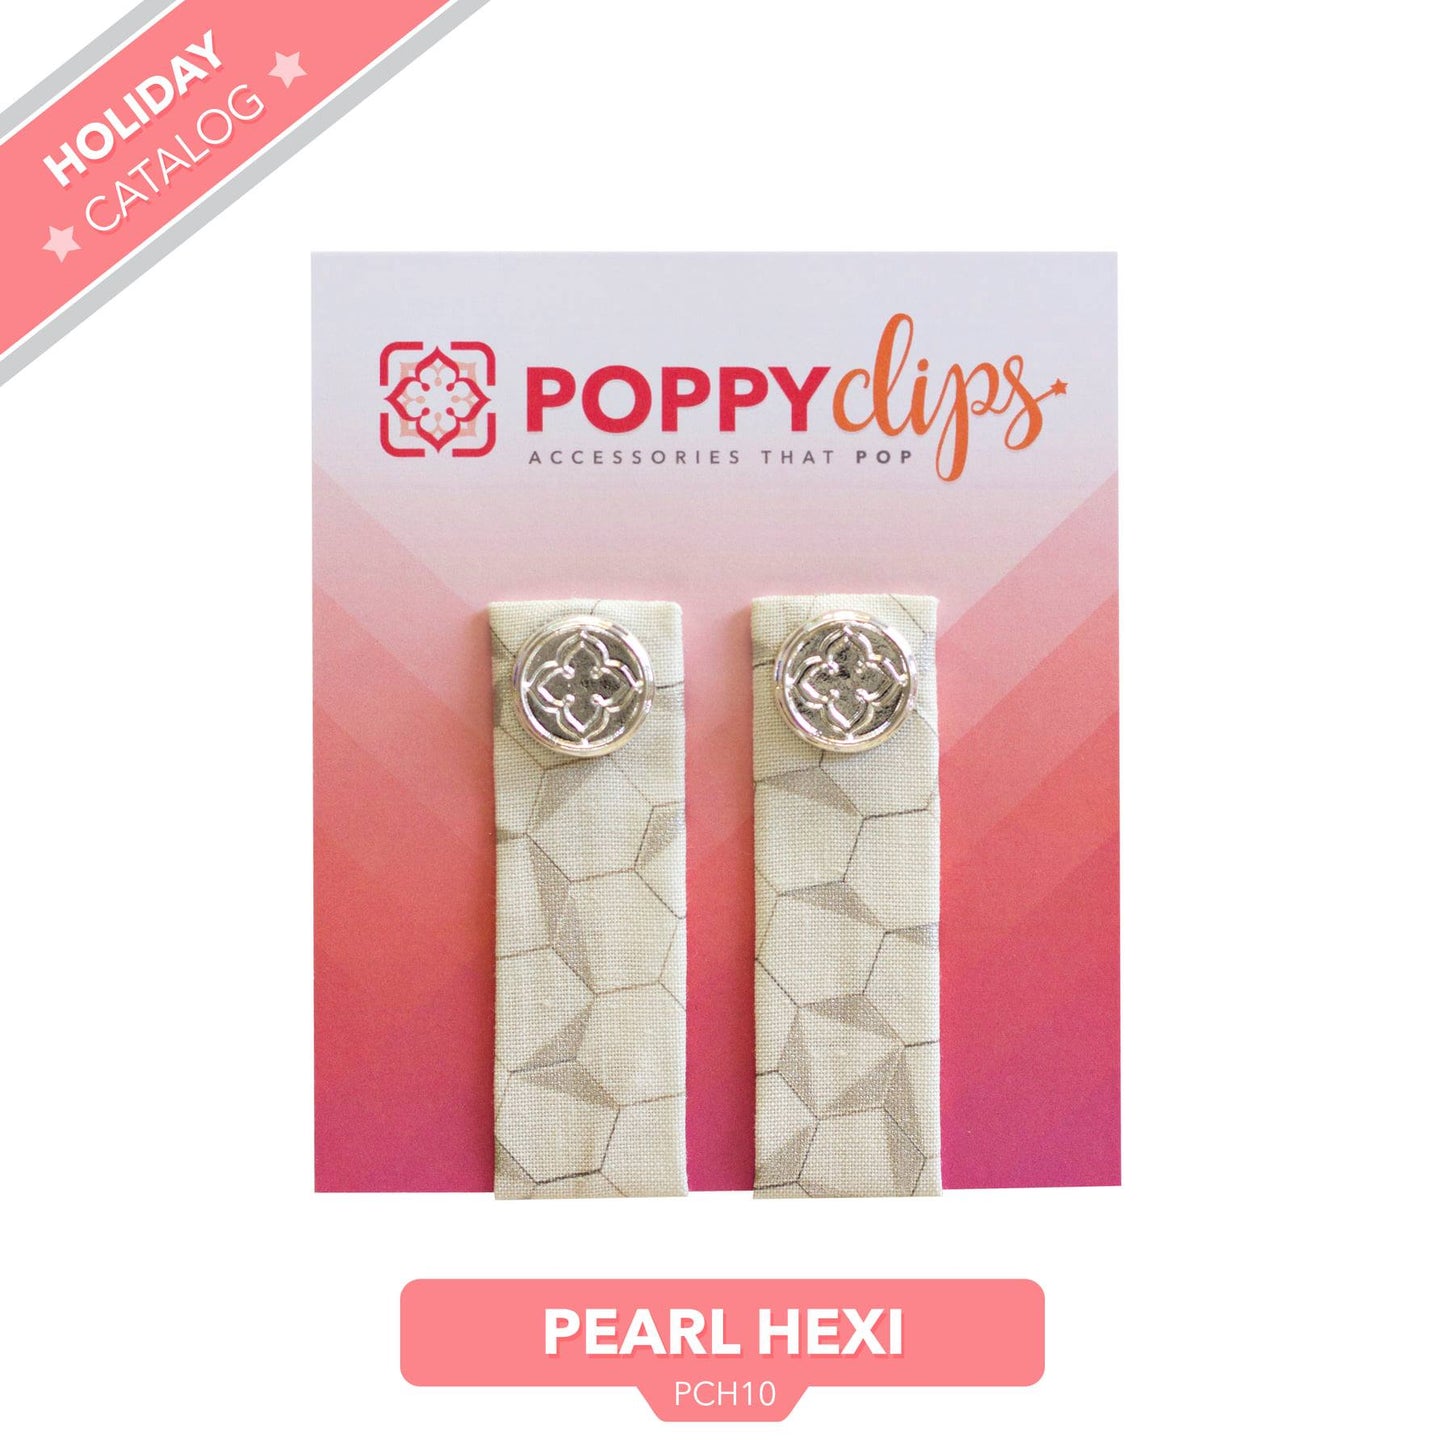 PoppyClips: Pearl Hexi